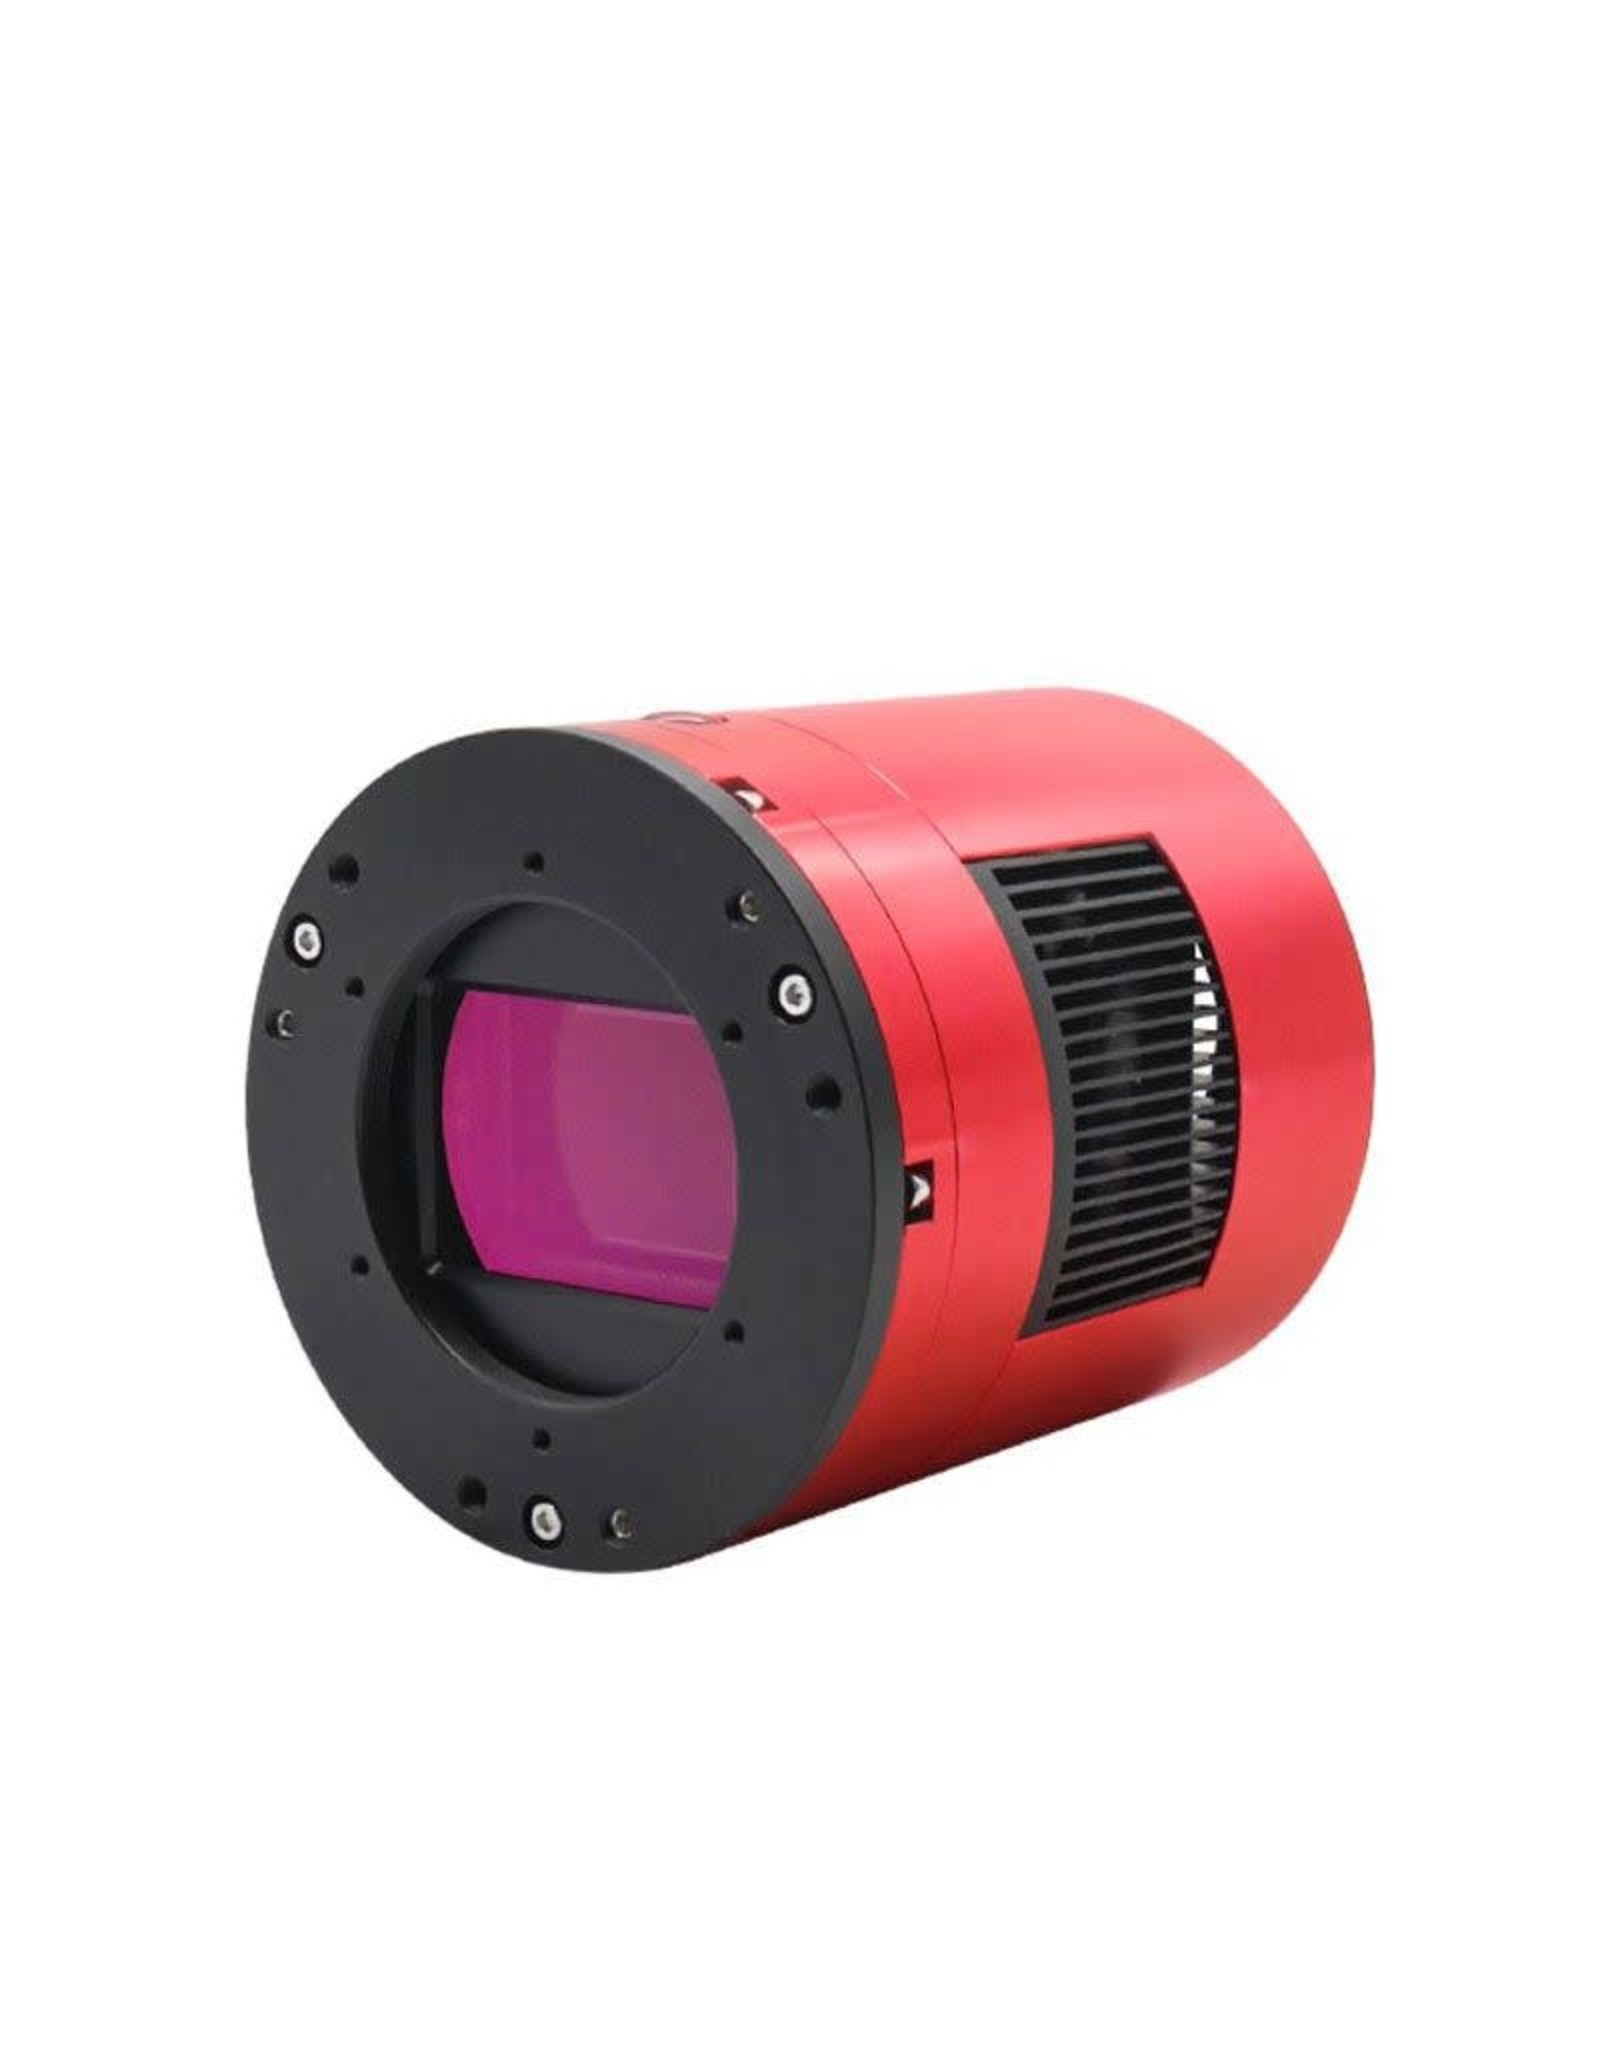 ZWO ZWO ASI2400MC-P Cooled Color Camera - ASI2400MC-P  ON SALE: $500 off!